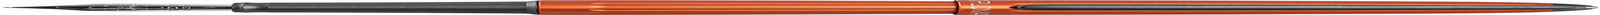 - Aero - Fountain Pen in Stainless Steel - Fine - Orange - Resistant and Elegant